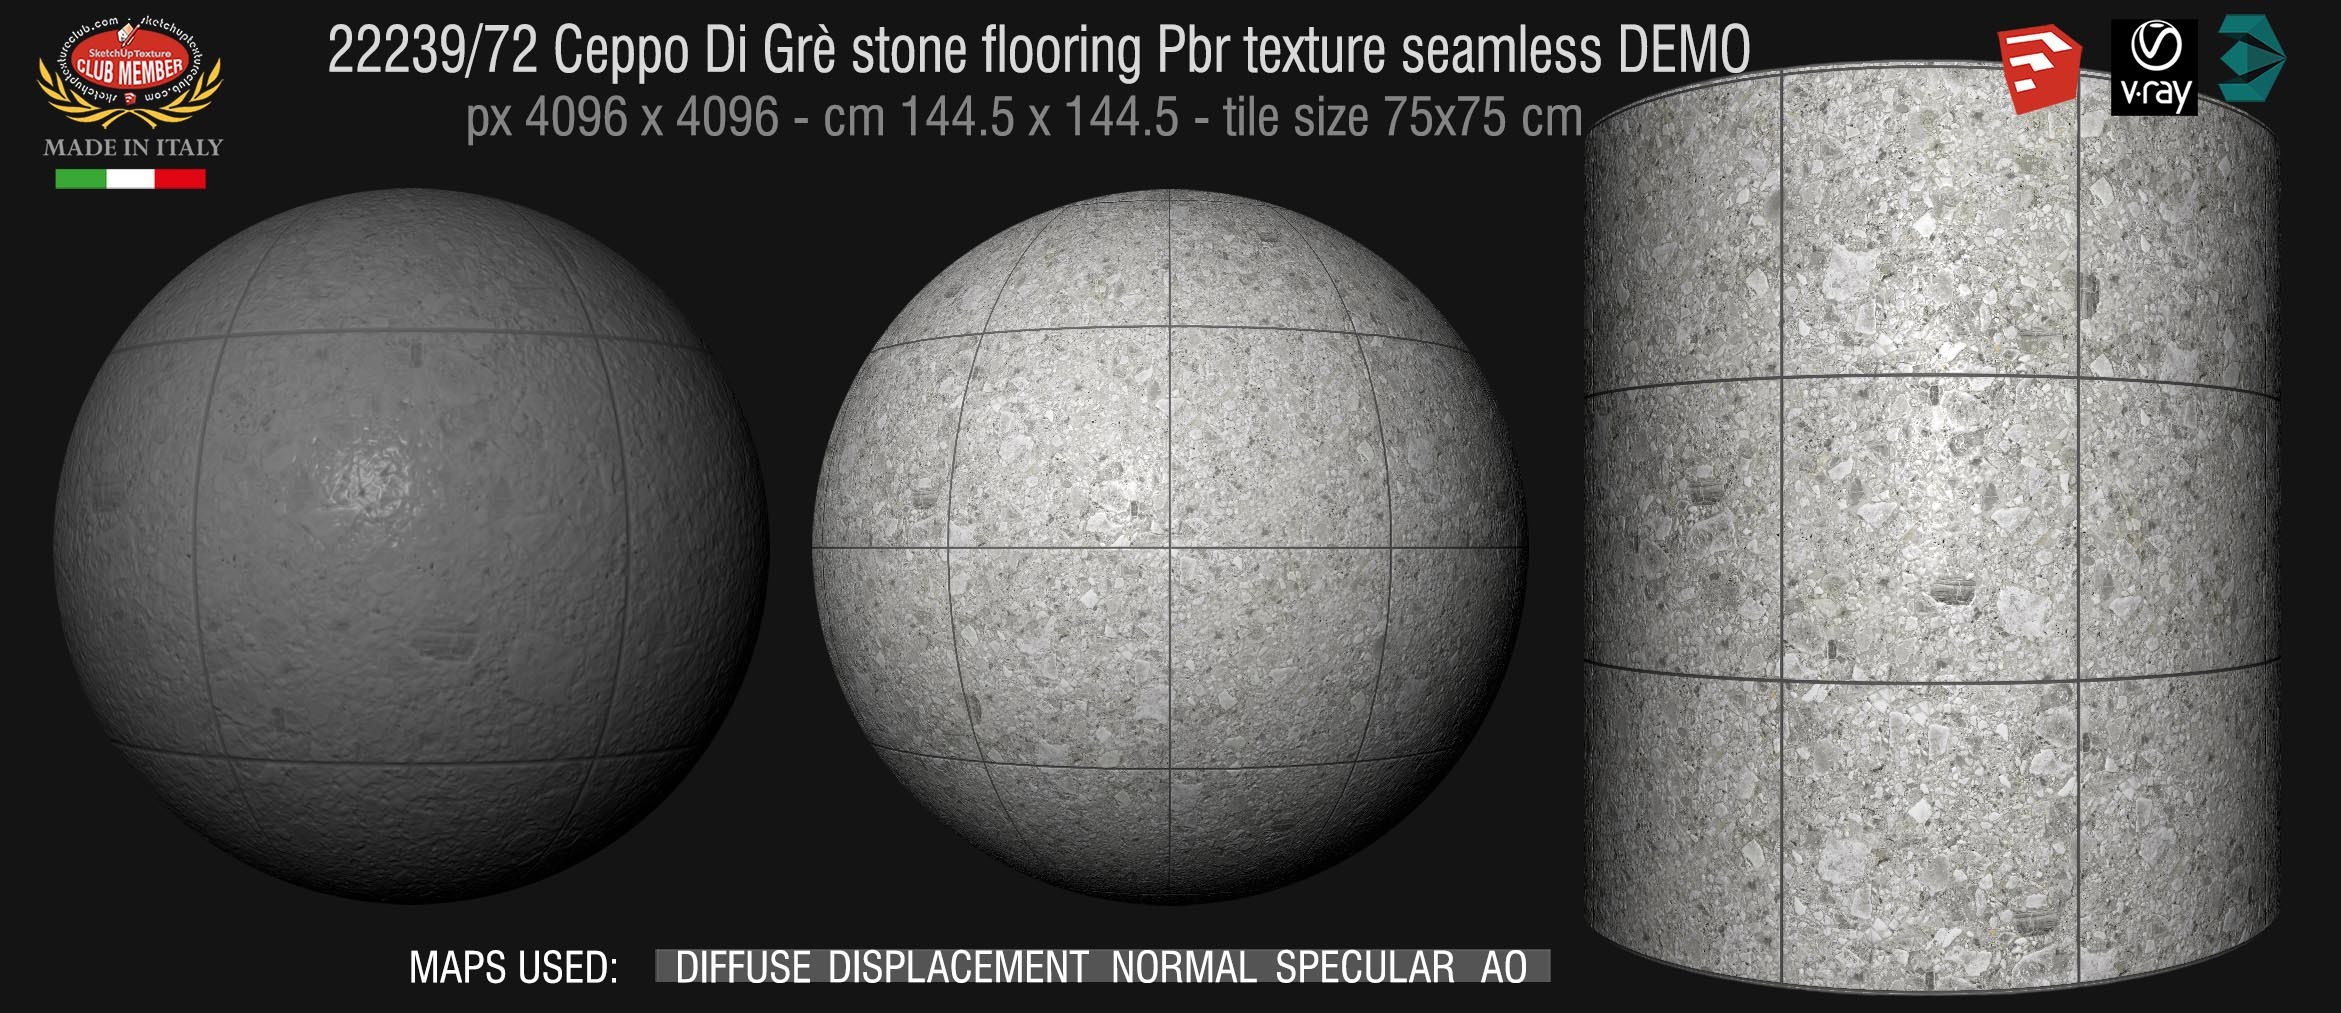 22239_72 Ceppo Di Grè stone flooring Pbr texture seamless DEMO - INTERIOR / OUTDOOR Paving - tile size 75x75 cm